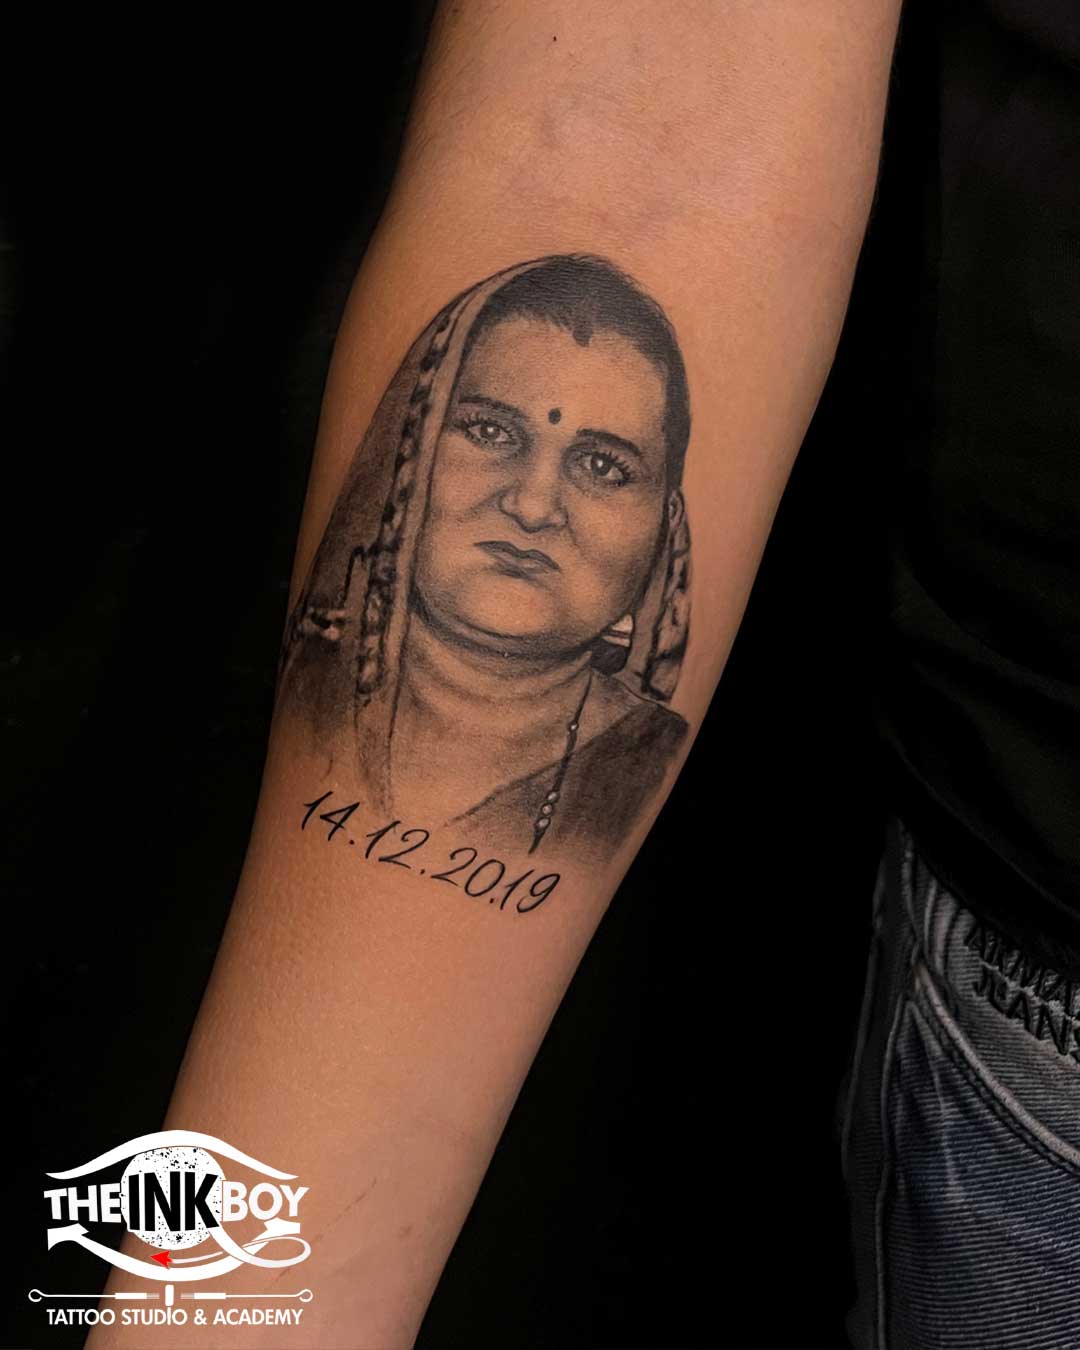 Chrisean Rock Tattoos Blueface Portrait on Her Face